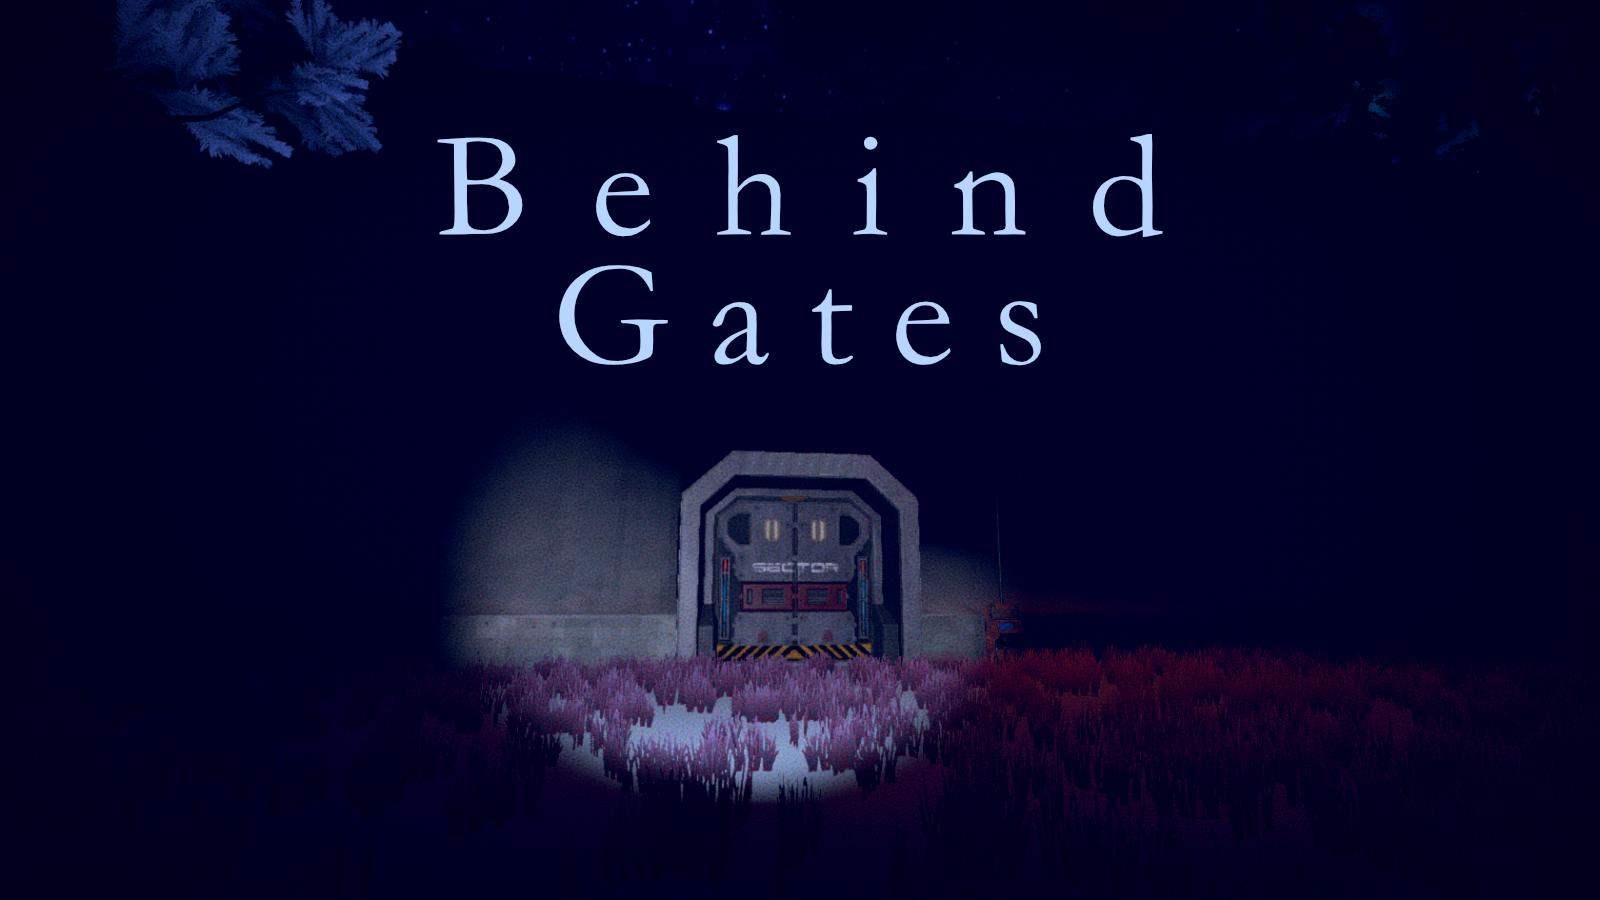 Behind Gates